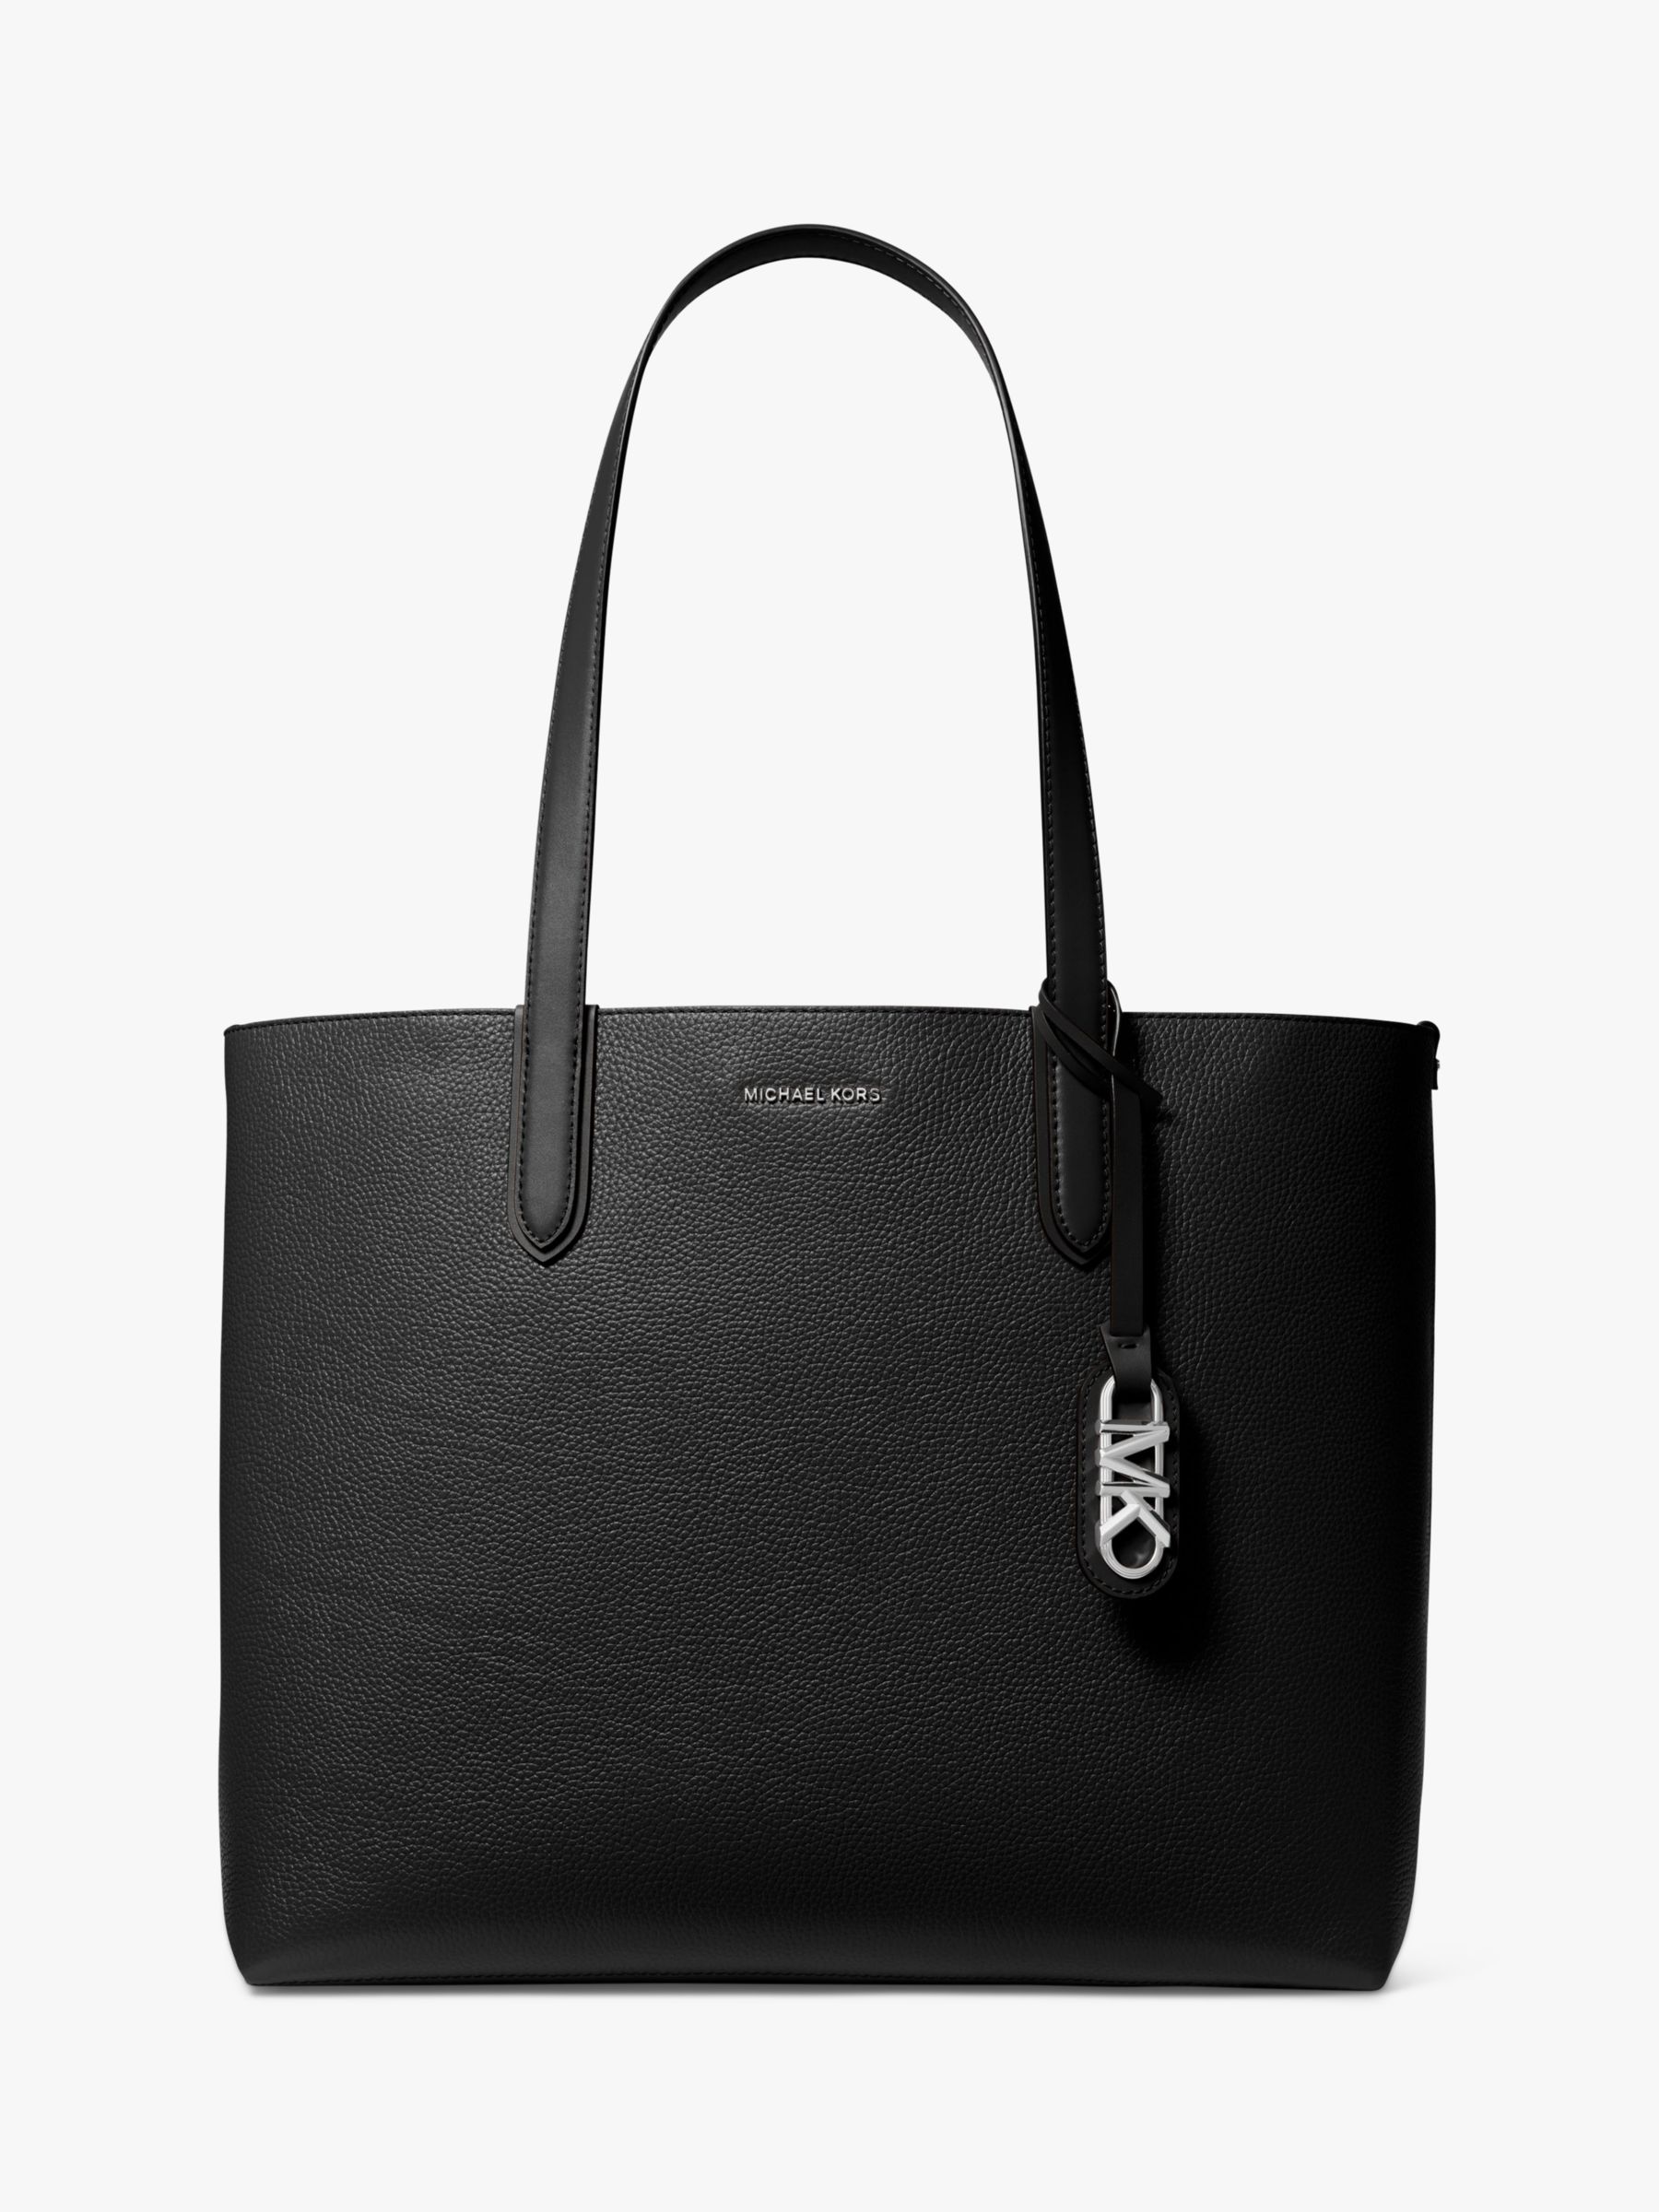 Michael Kors Eliza Leather Tote Bag, Black